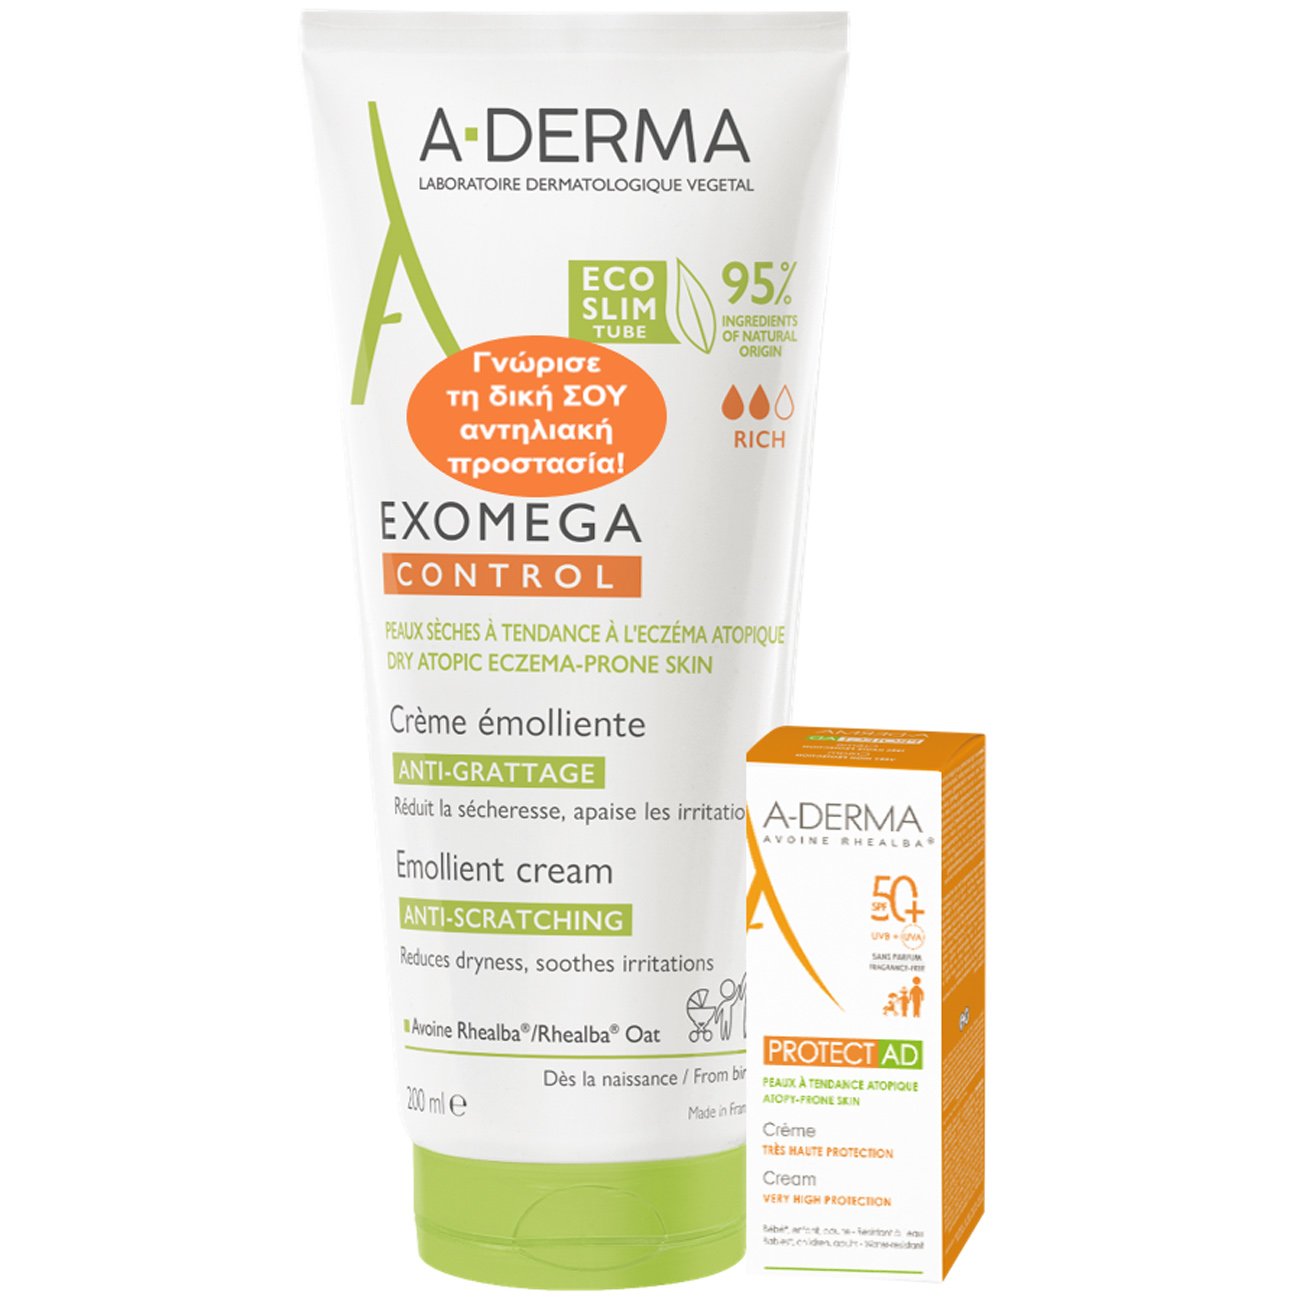 A-Derma Πακέτο Προσφοράς Exomega Control Emollient Cream 200ml & Δώρο Protect AD Cream Spf50+, 5ml